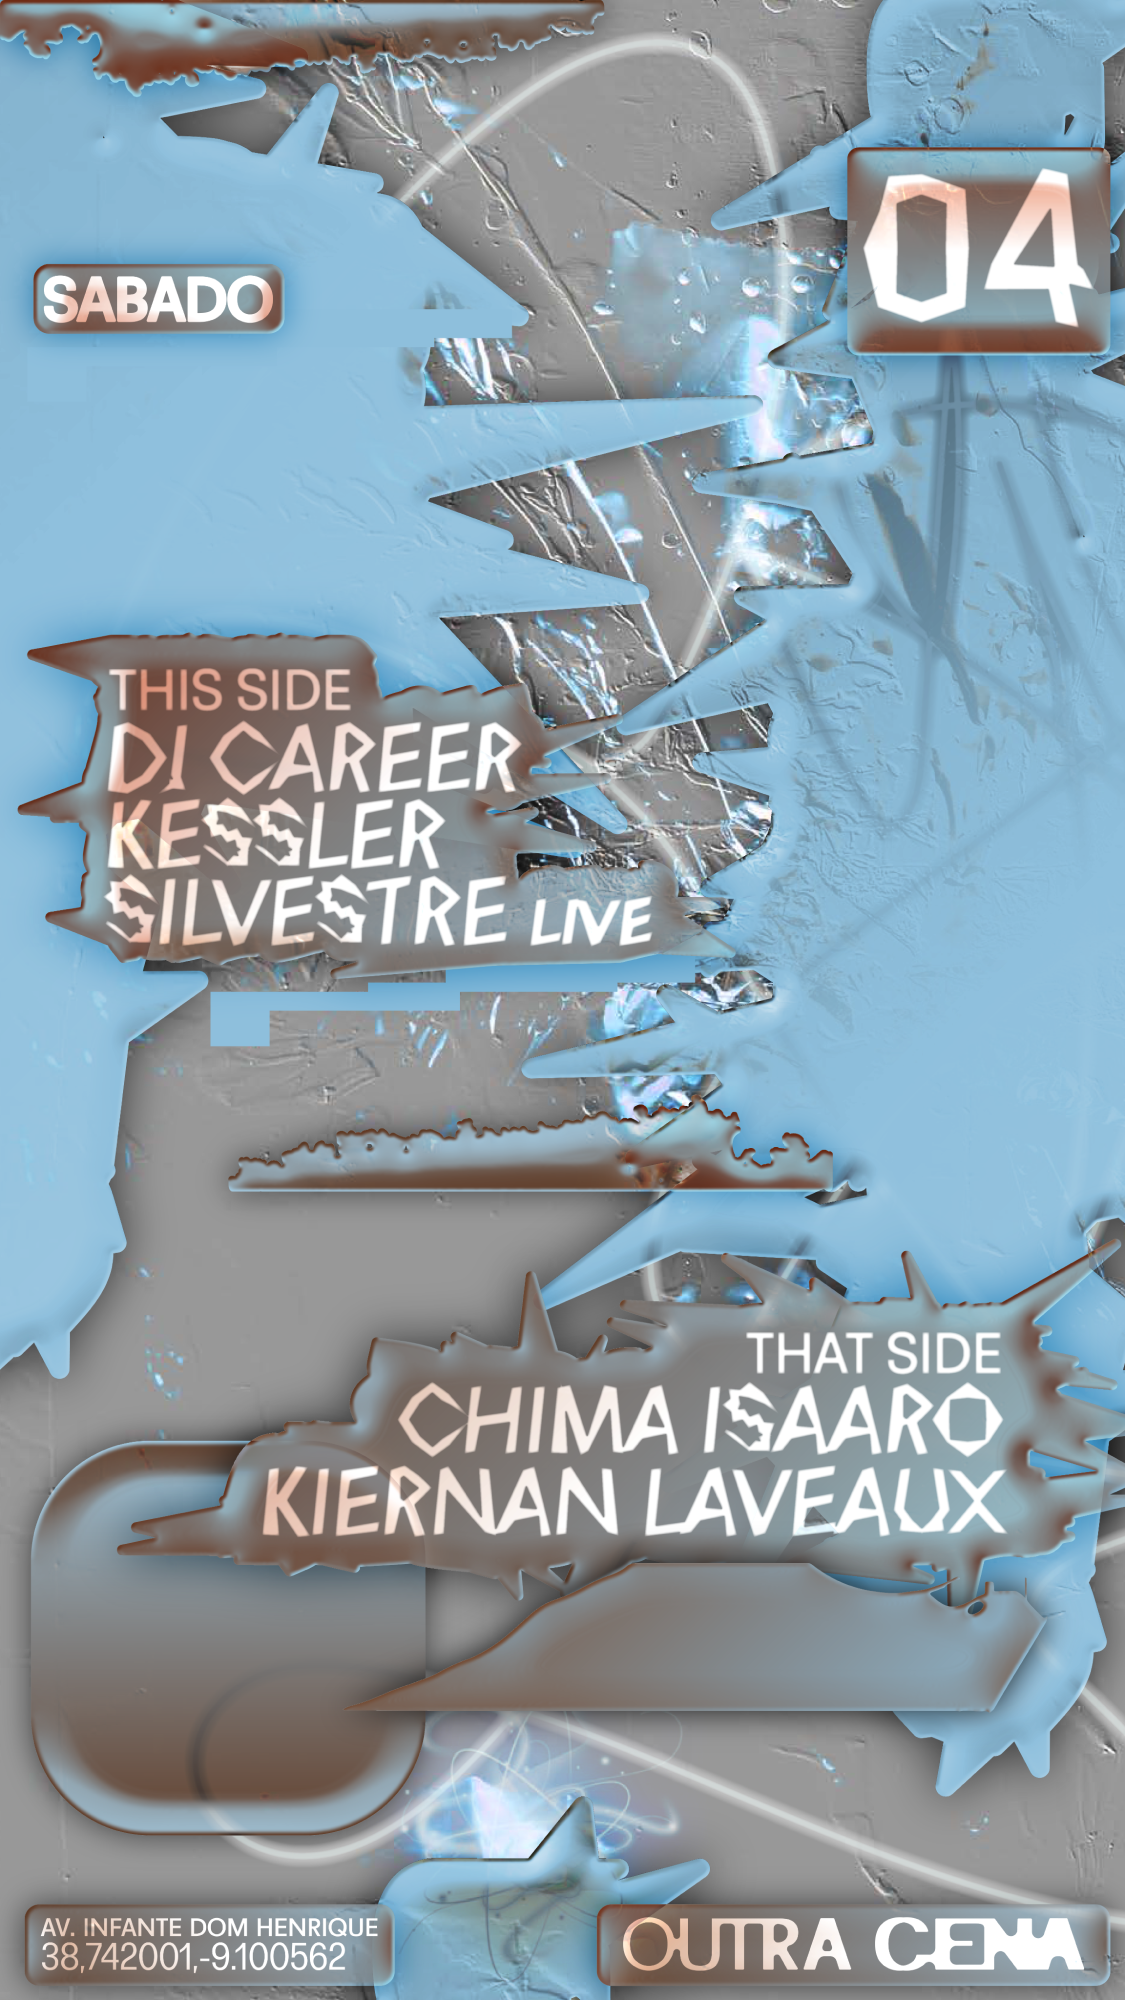 Chima Isaaro, DJ Career, Kessler, Kiernan Laveaux, Silvestre live - フライヤー表